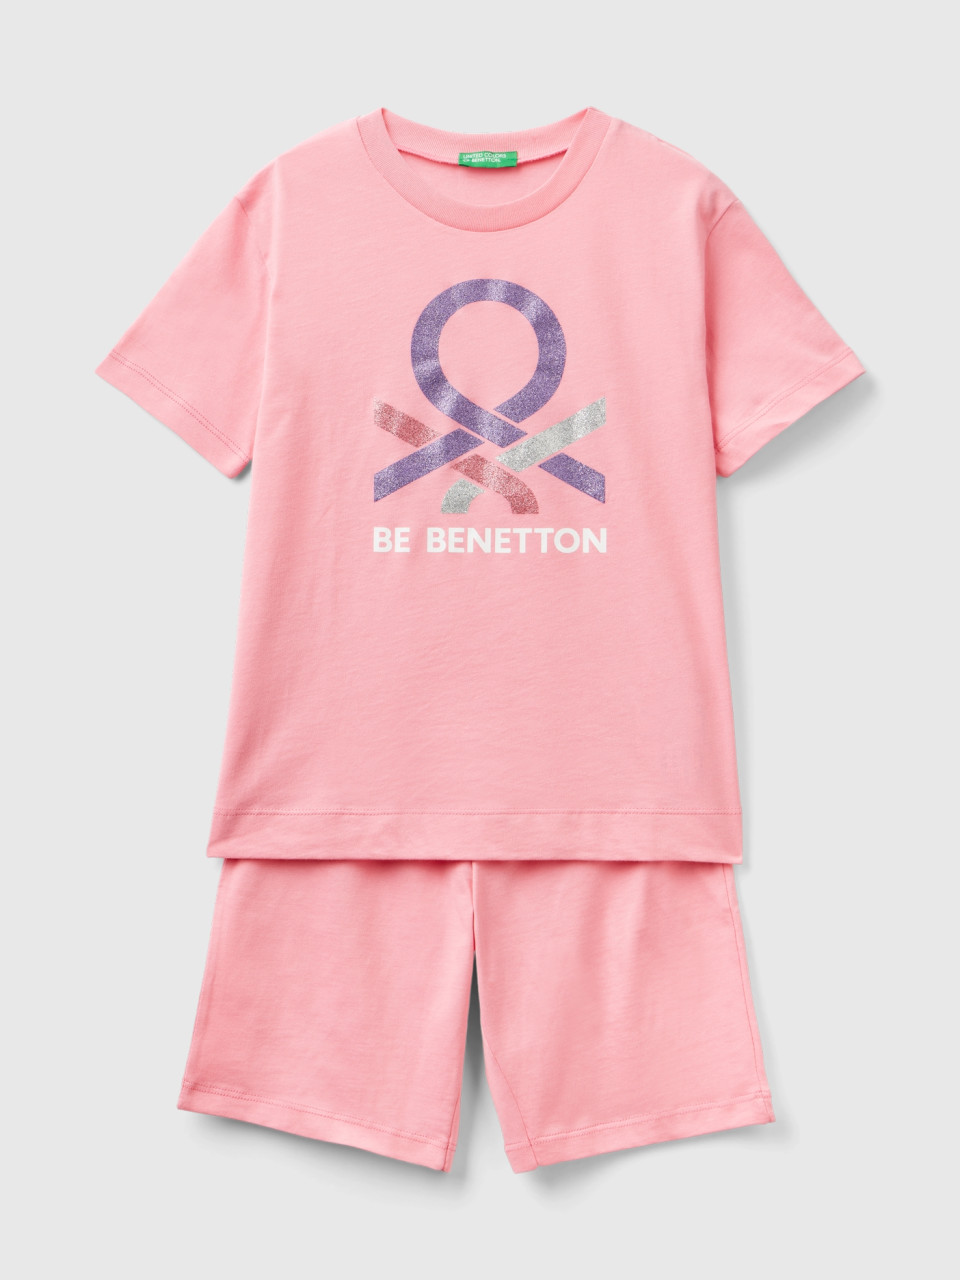 Benetton, Kurzer Pyjama In Rosa Mit Glitzerlogo, Pink, female